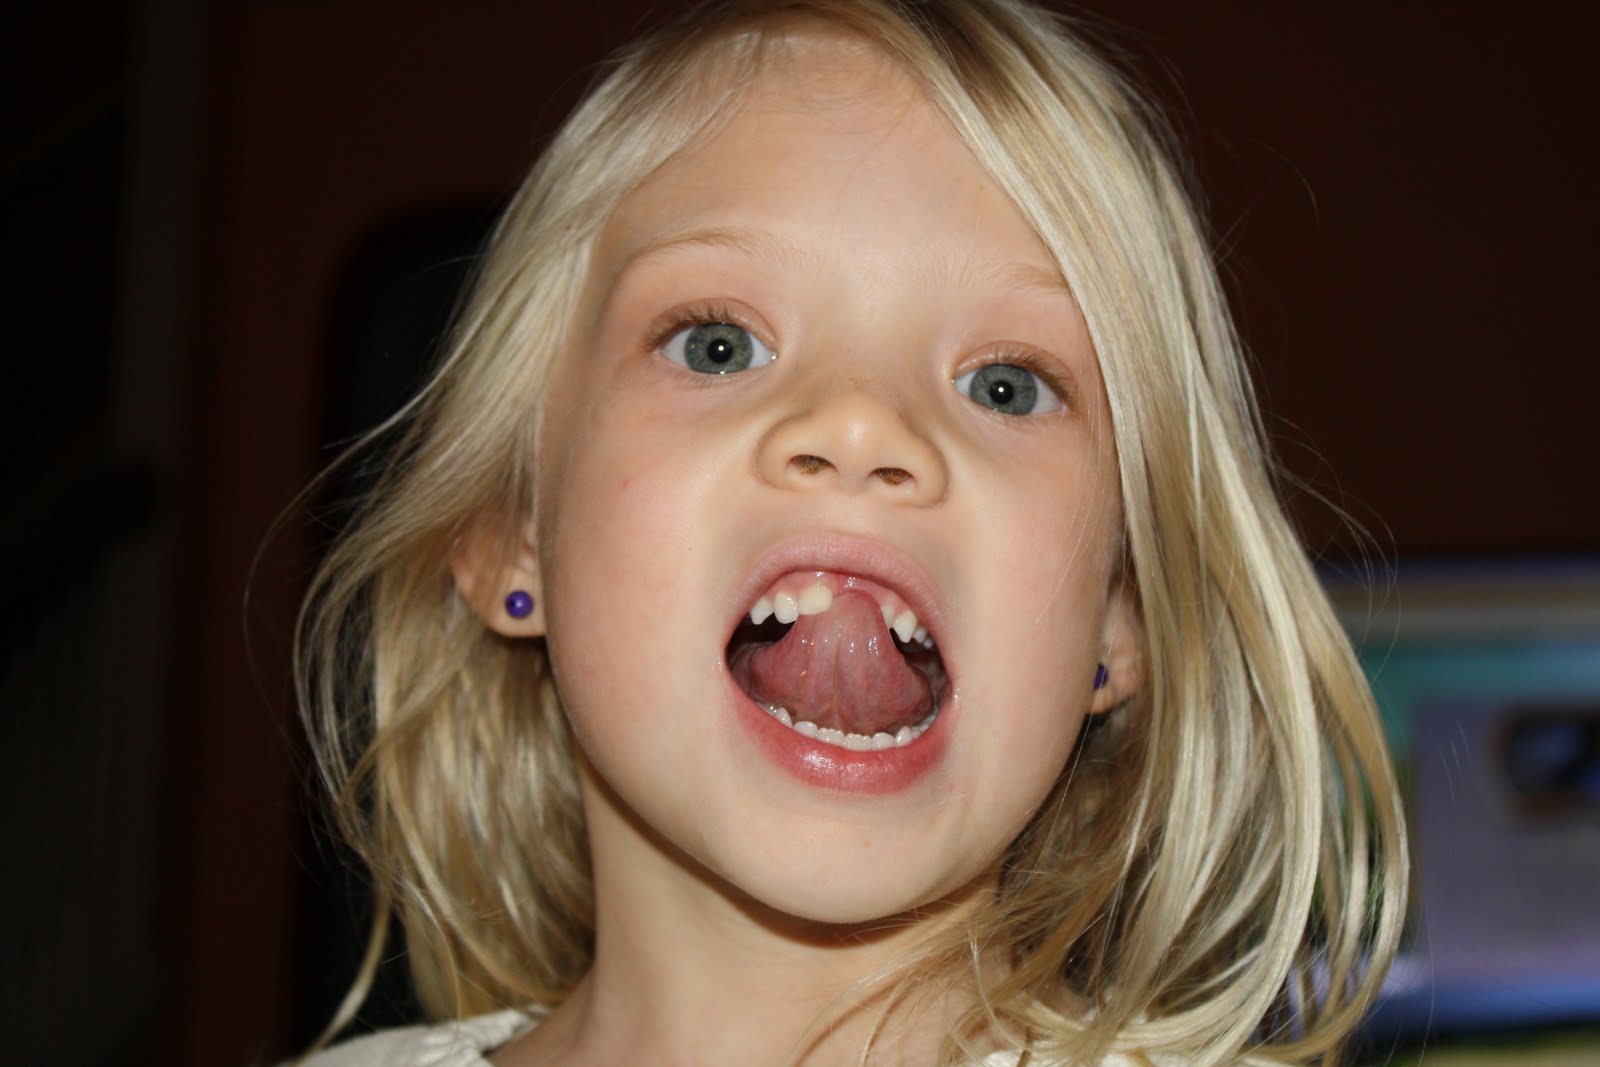 Imagebam orlow set. Девочка с открытым ртом. Дети с открытым ртом. Красивые девочки с открытым ртом. Маленькая девочка с открытым ртом.